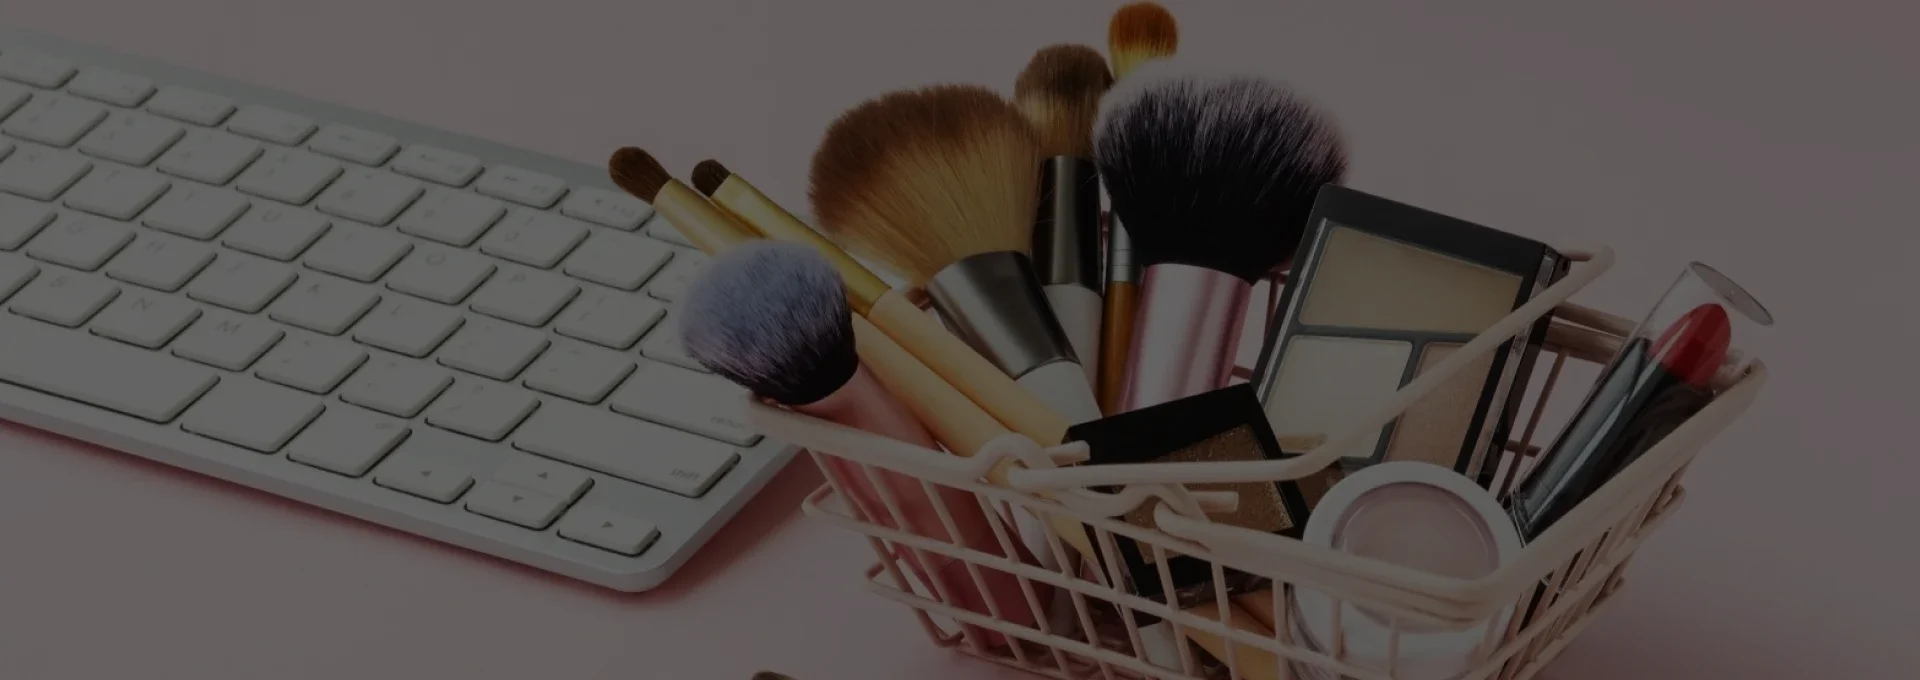 Beauty Products Marketplace development